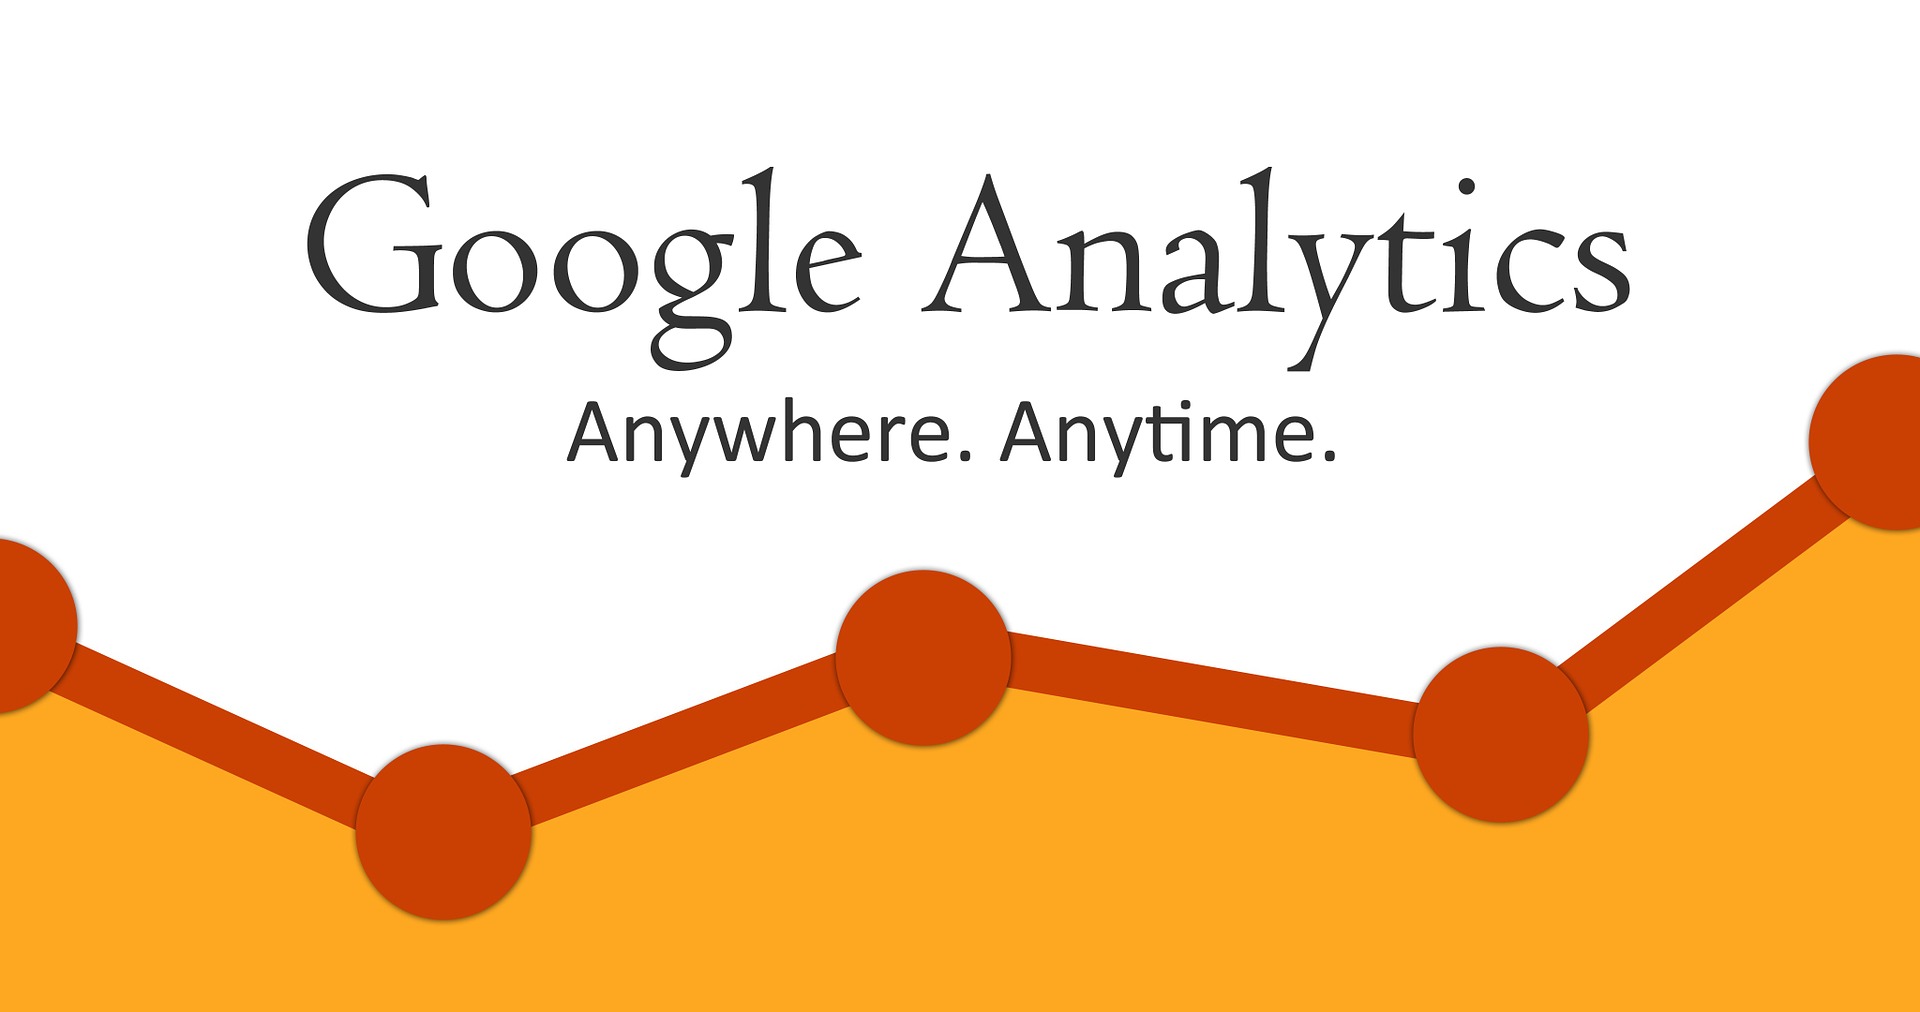 Google Analytics tool to monito website traffic